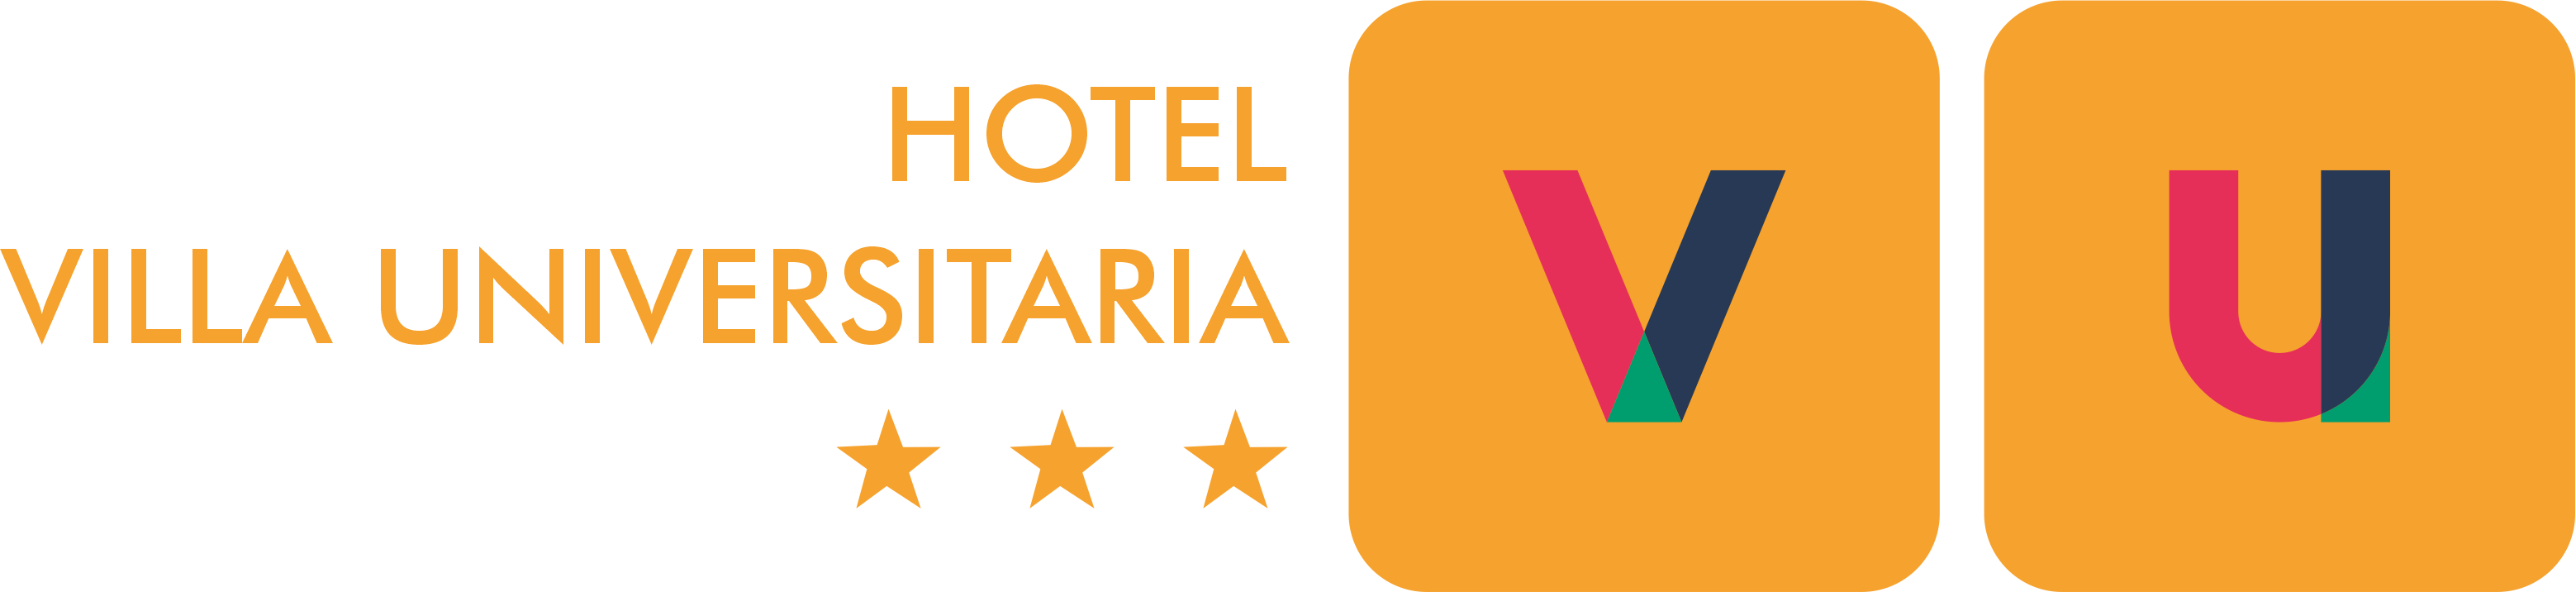 Hotel Villa Universitaria